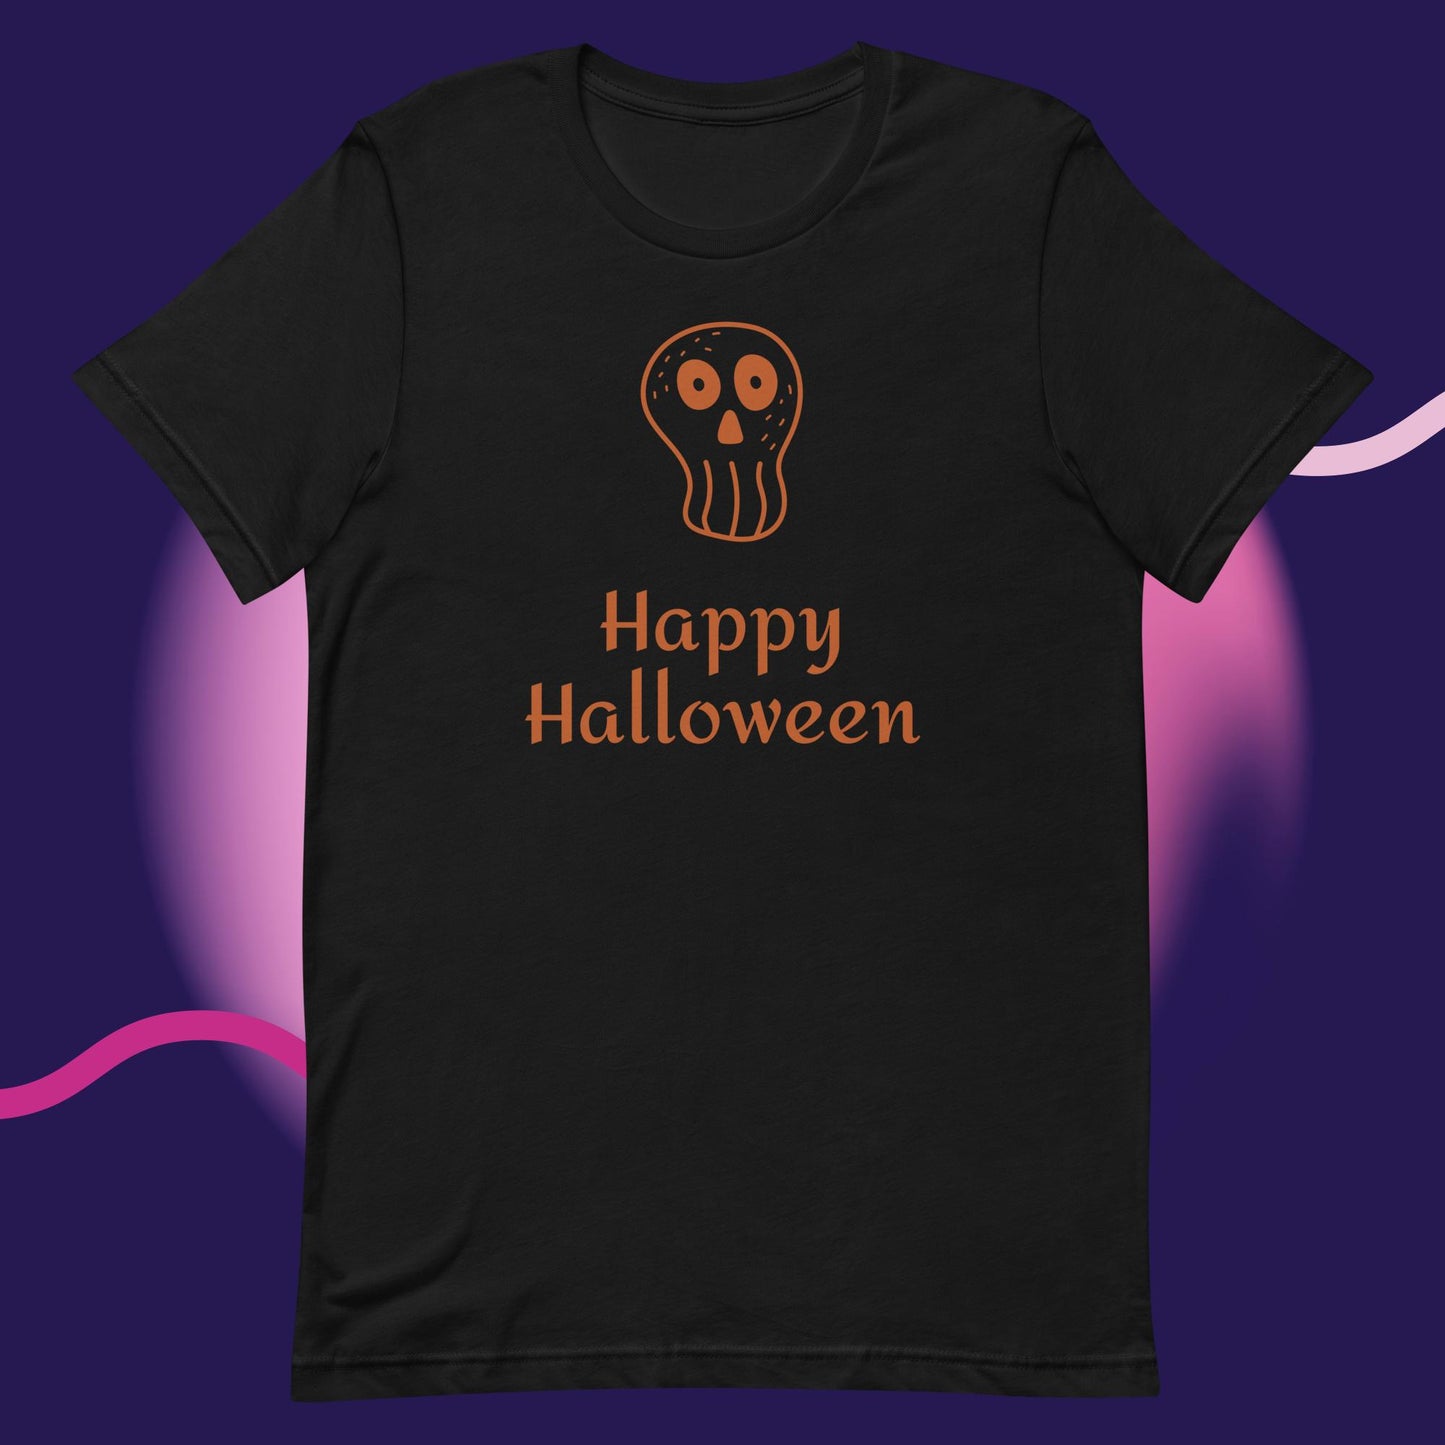 Happy Halloween unisex t-shirt